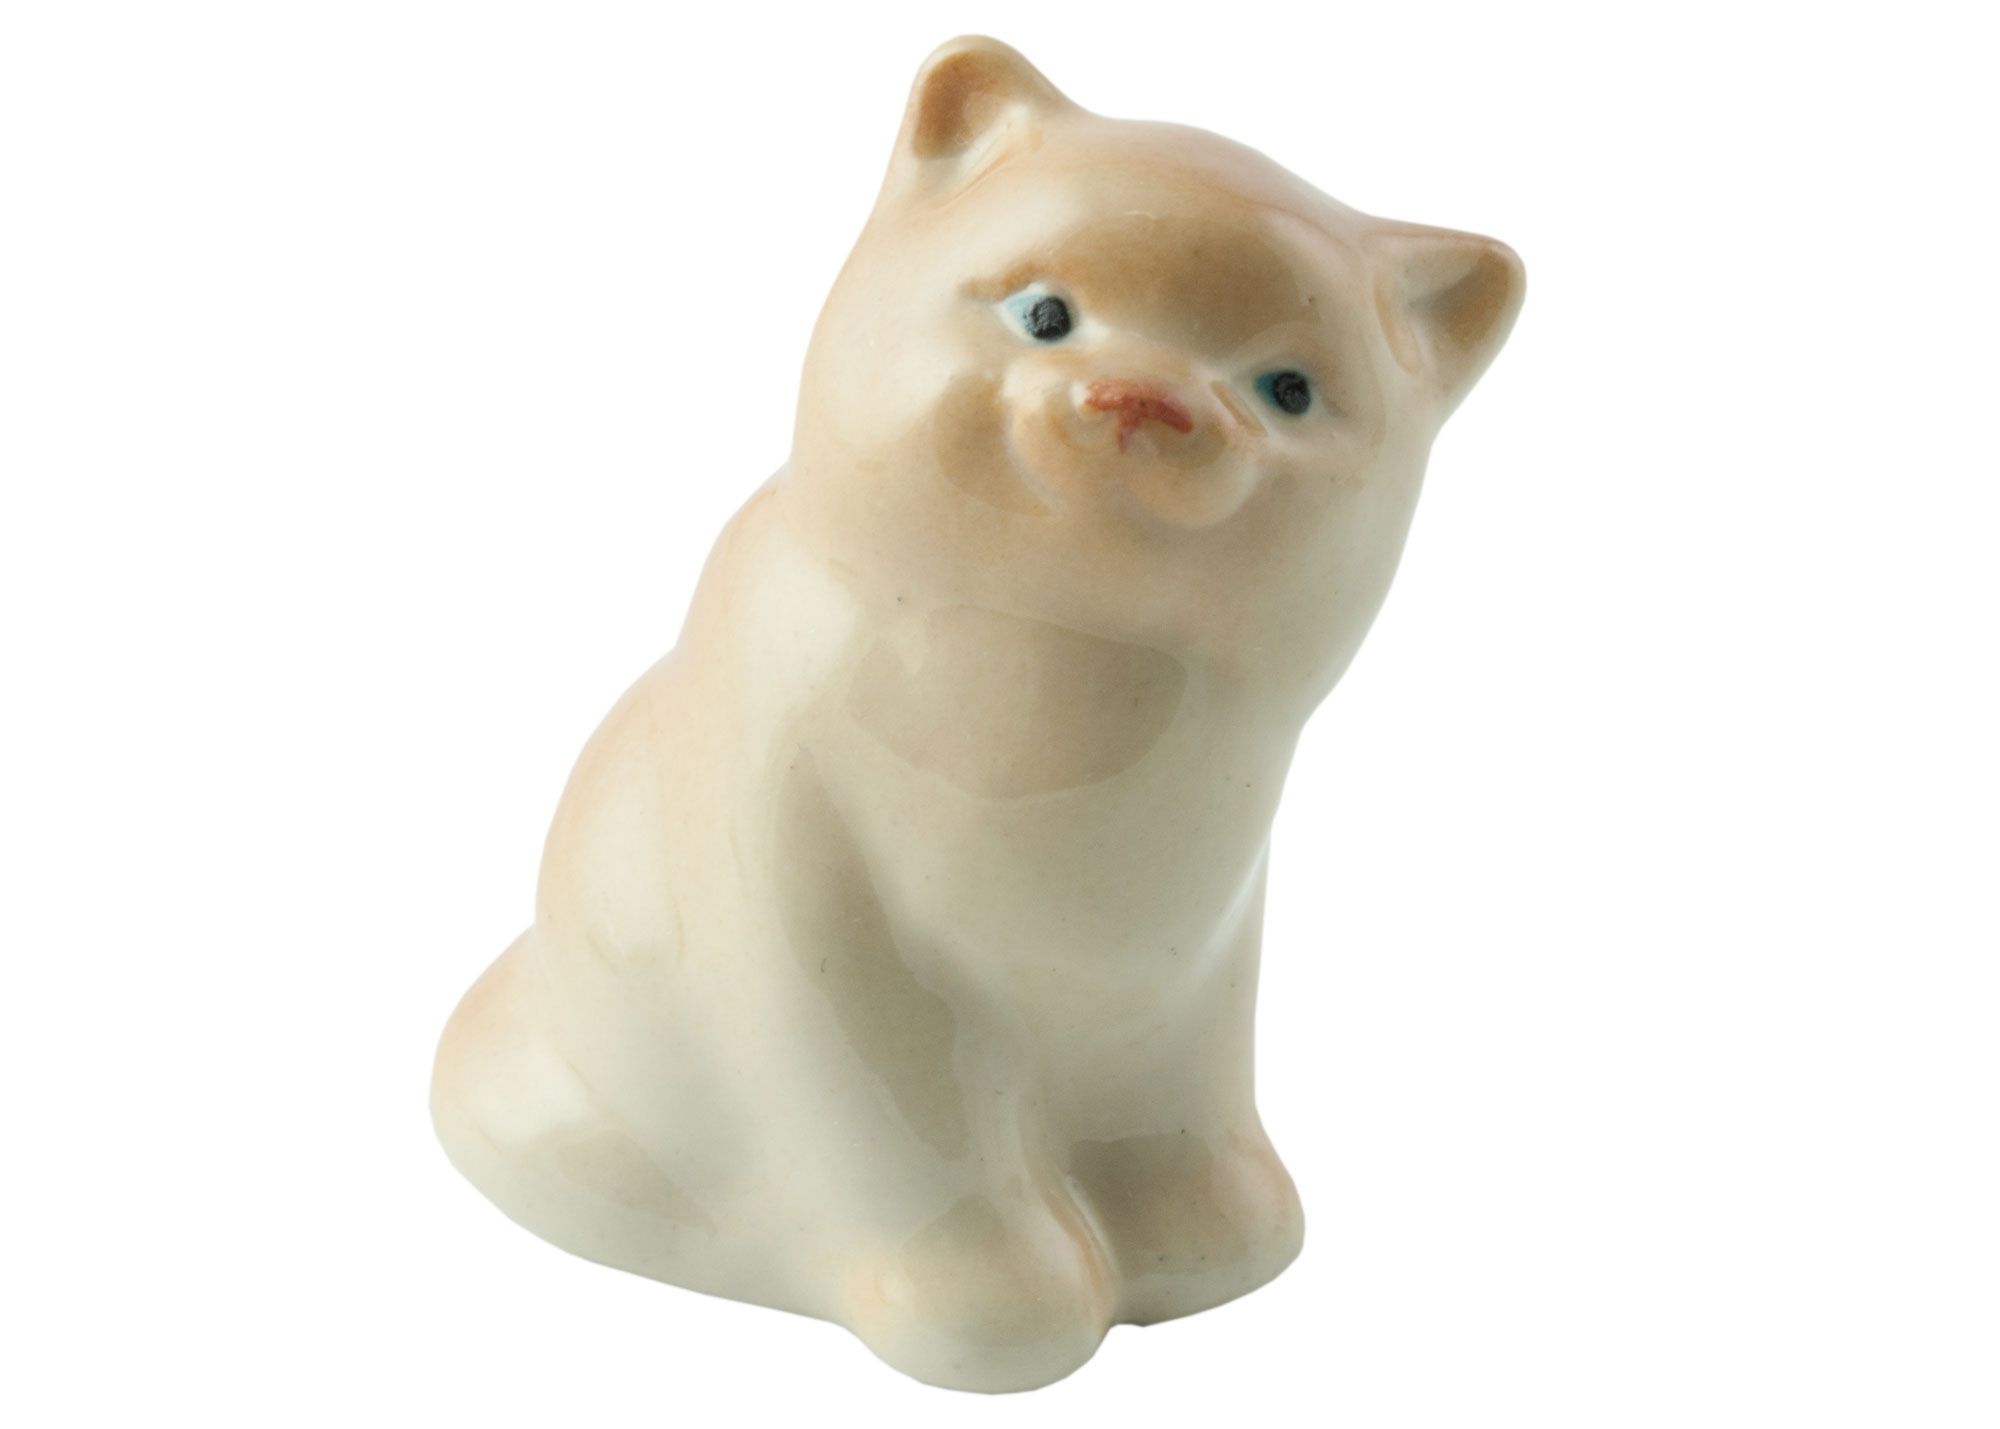 Buy Tan Murzick Cat Porcelain Figurine at GoldenCockerel.com